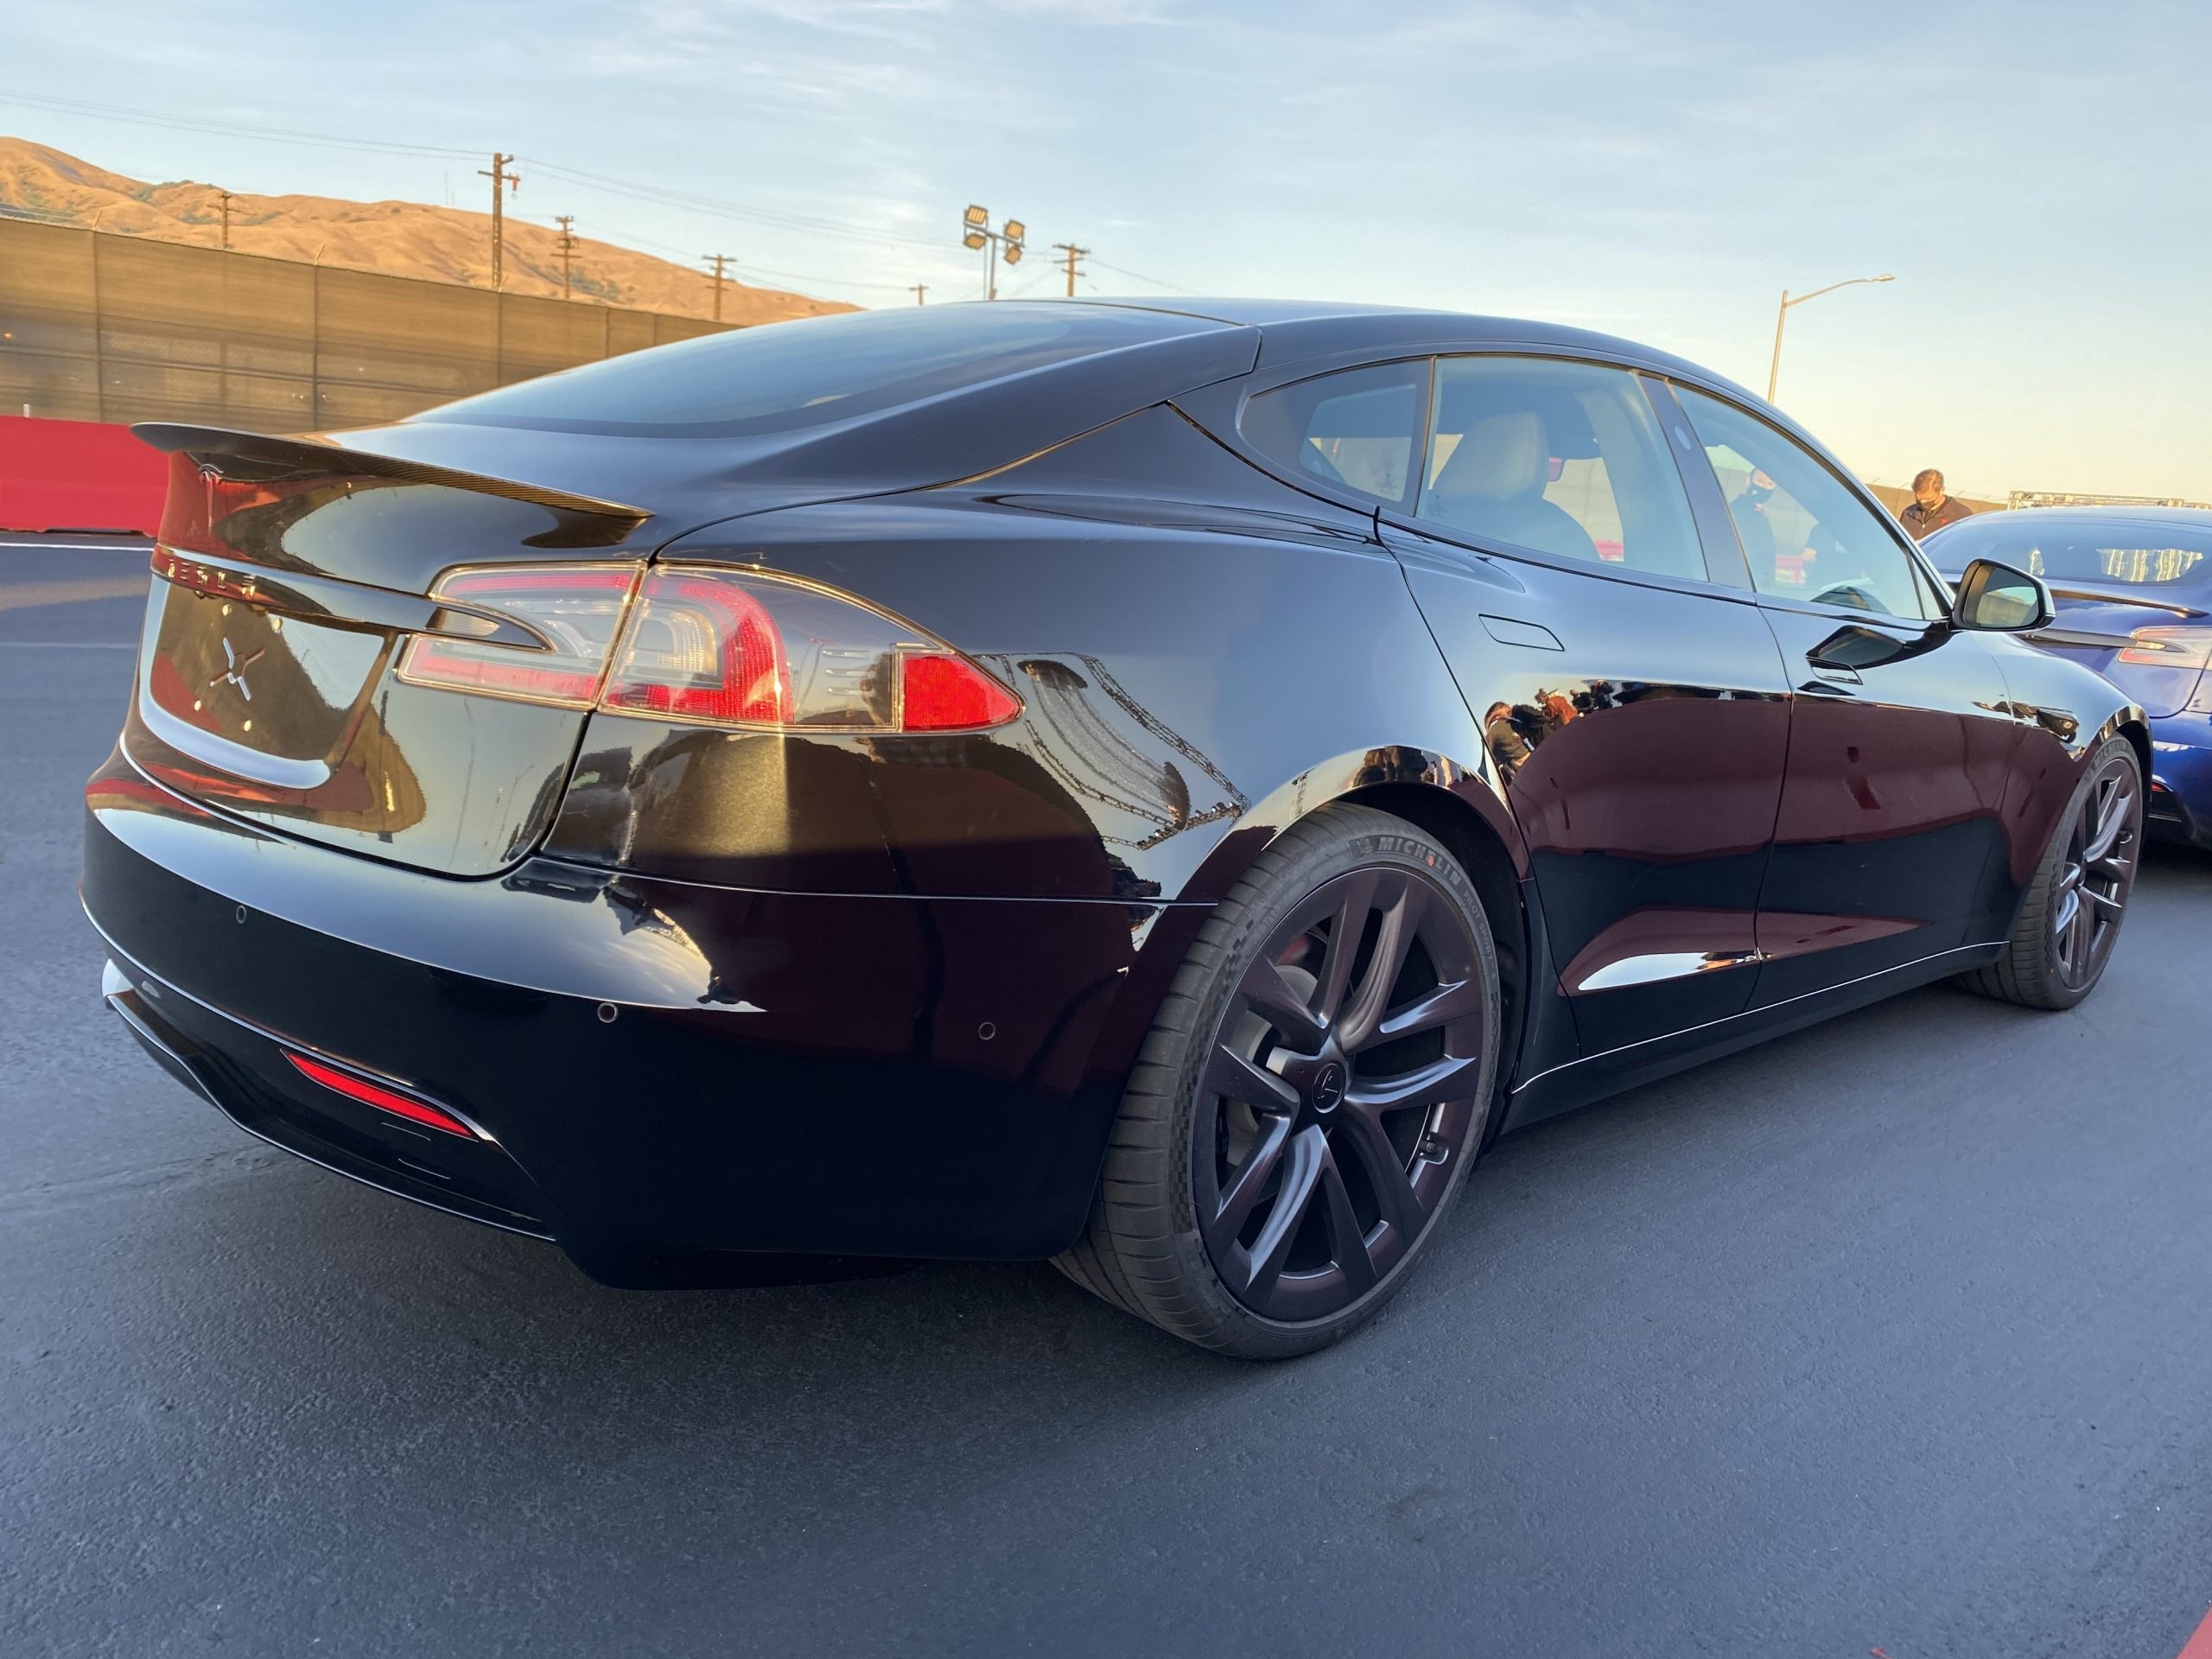 Model x plaid. Tesla model s Plaid 2021. Тесла model s Plaid 2021. Тесла модель s Plaid Plus 2021. Tesla model s Plaid p100d.